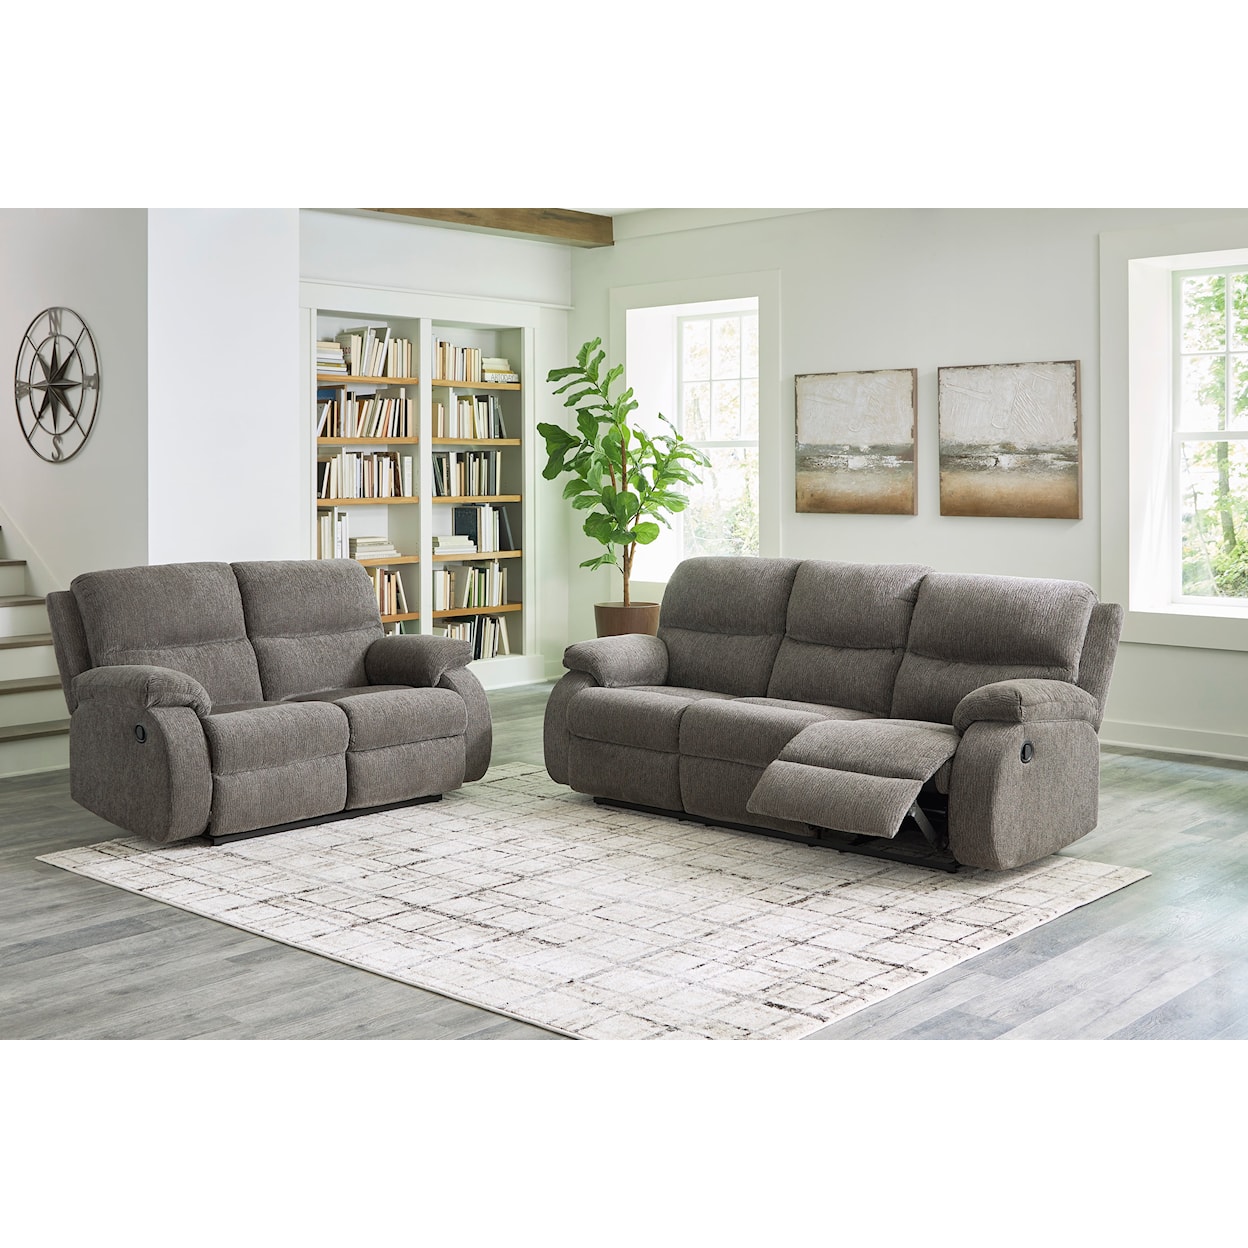 StyleLine Scranto Living Room Set